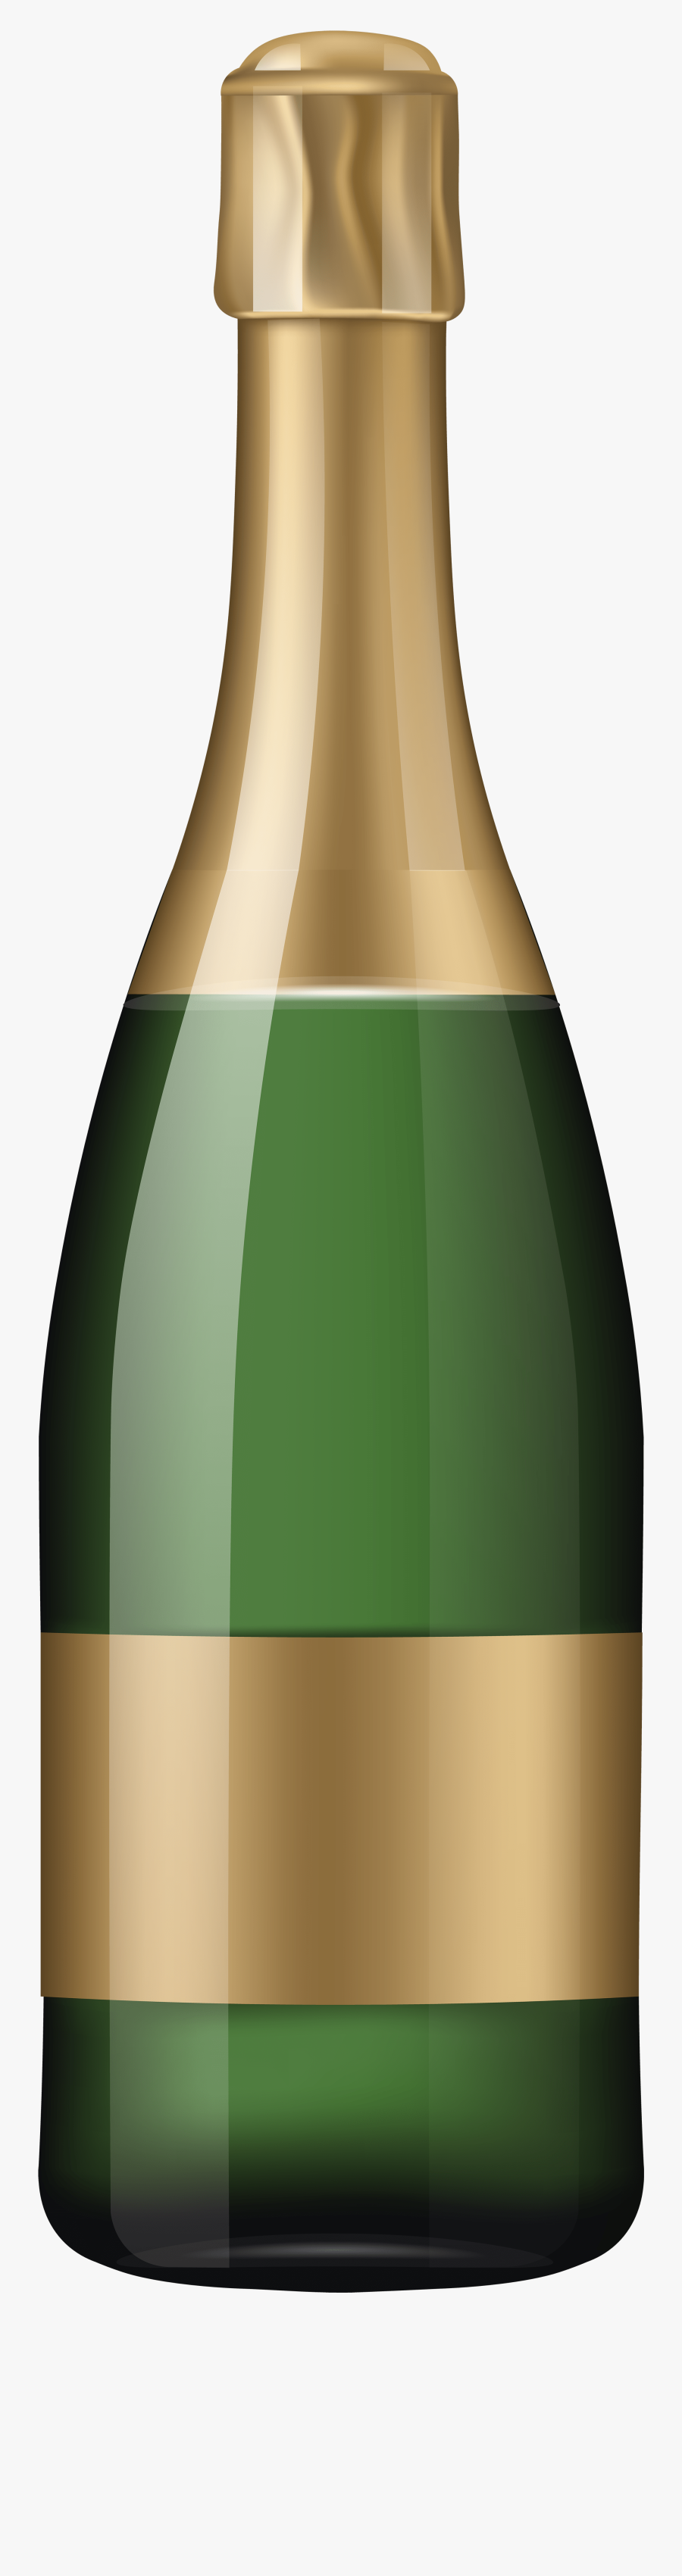 Champagne Bottles Png - Champagne Bottle Clipart Png, Transparent Clipart